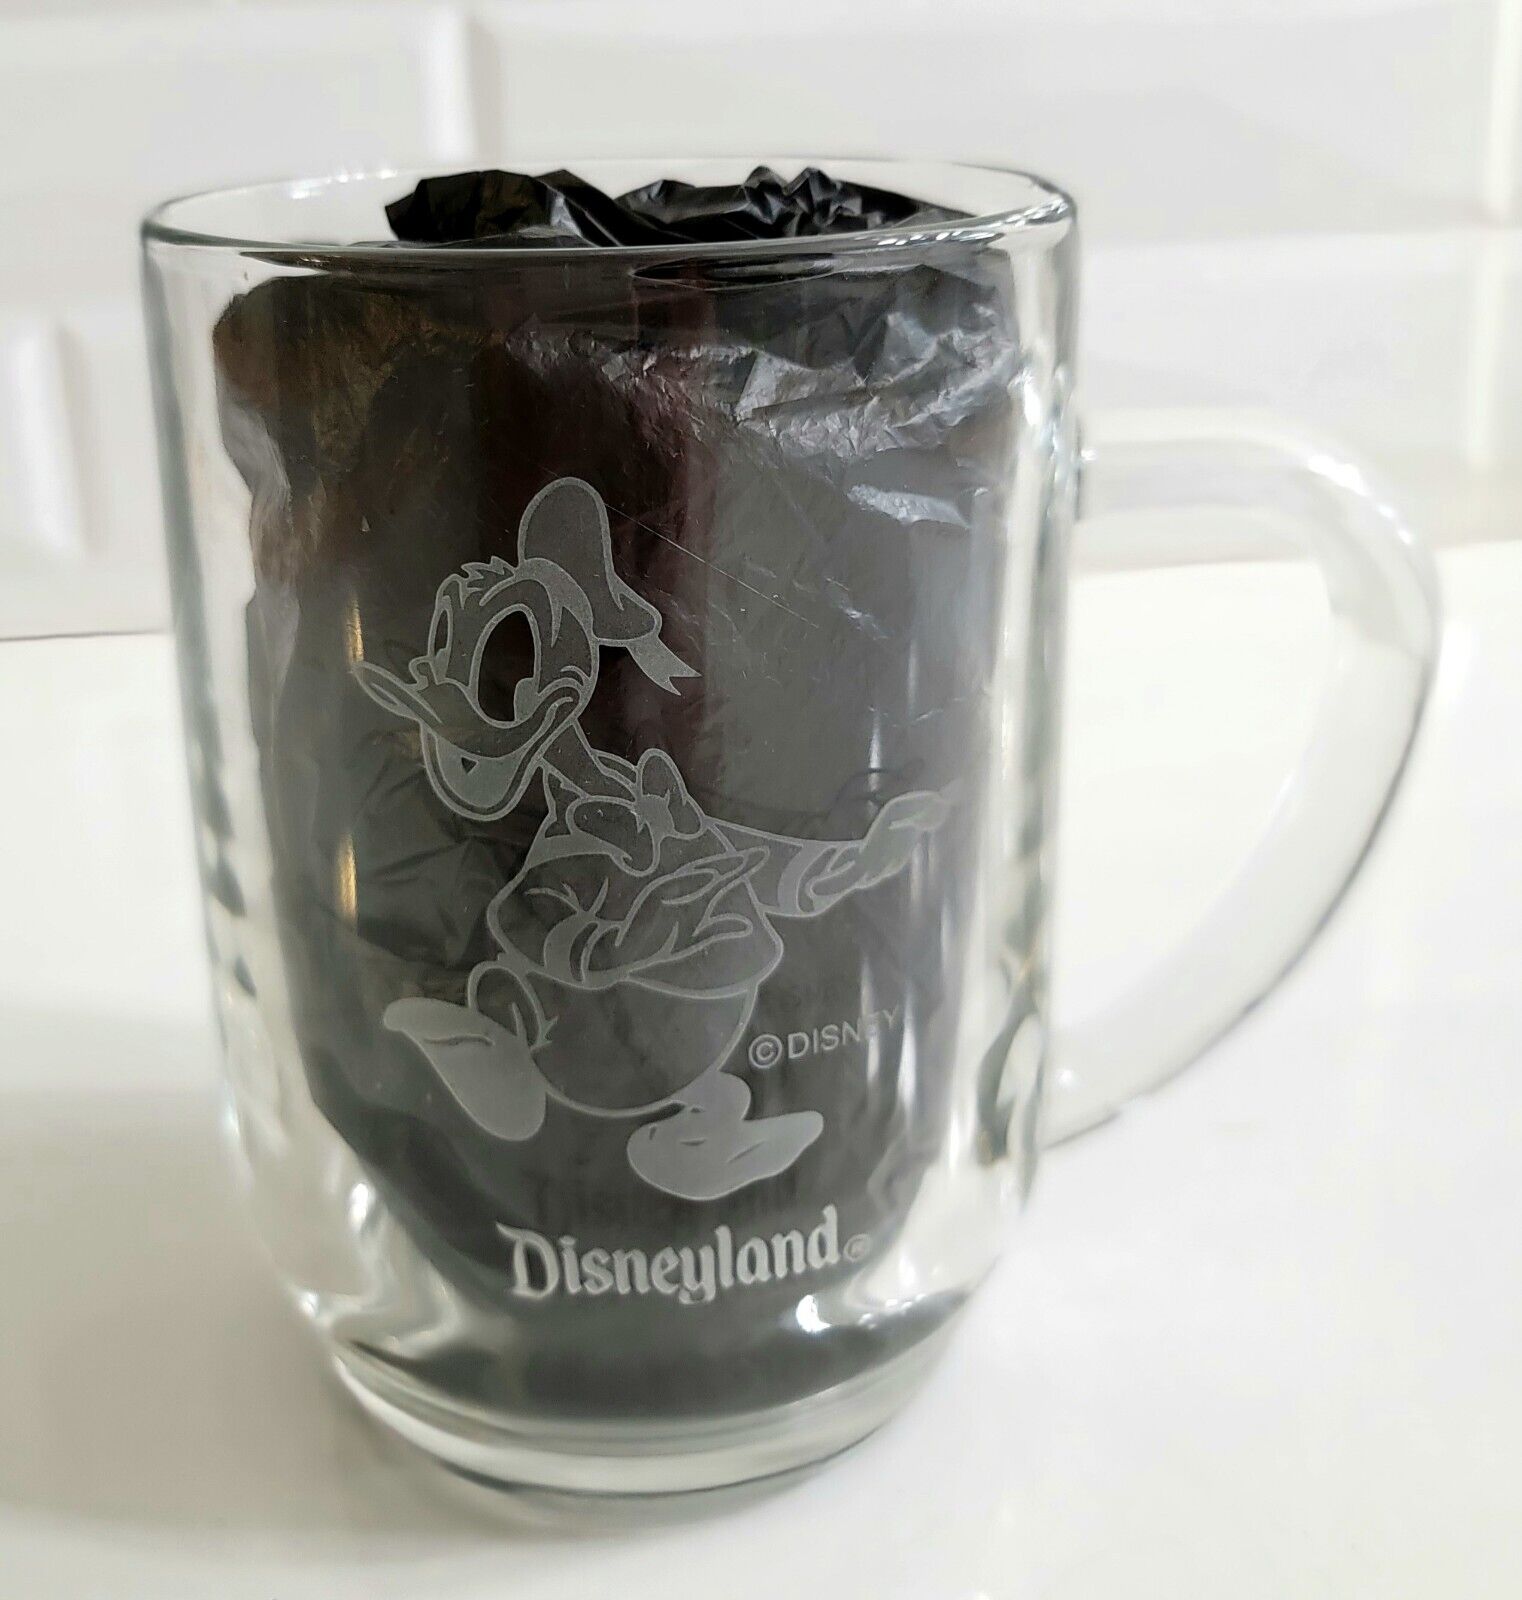 Vintage Donald Duck  Disney Etched Glass Mug from Disneyland - Personalized Lisa